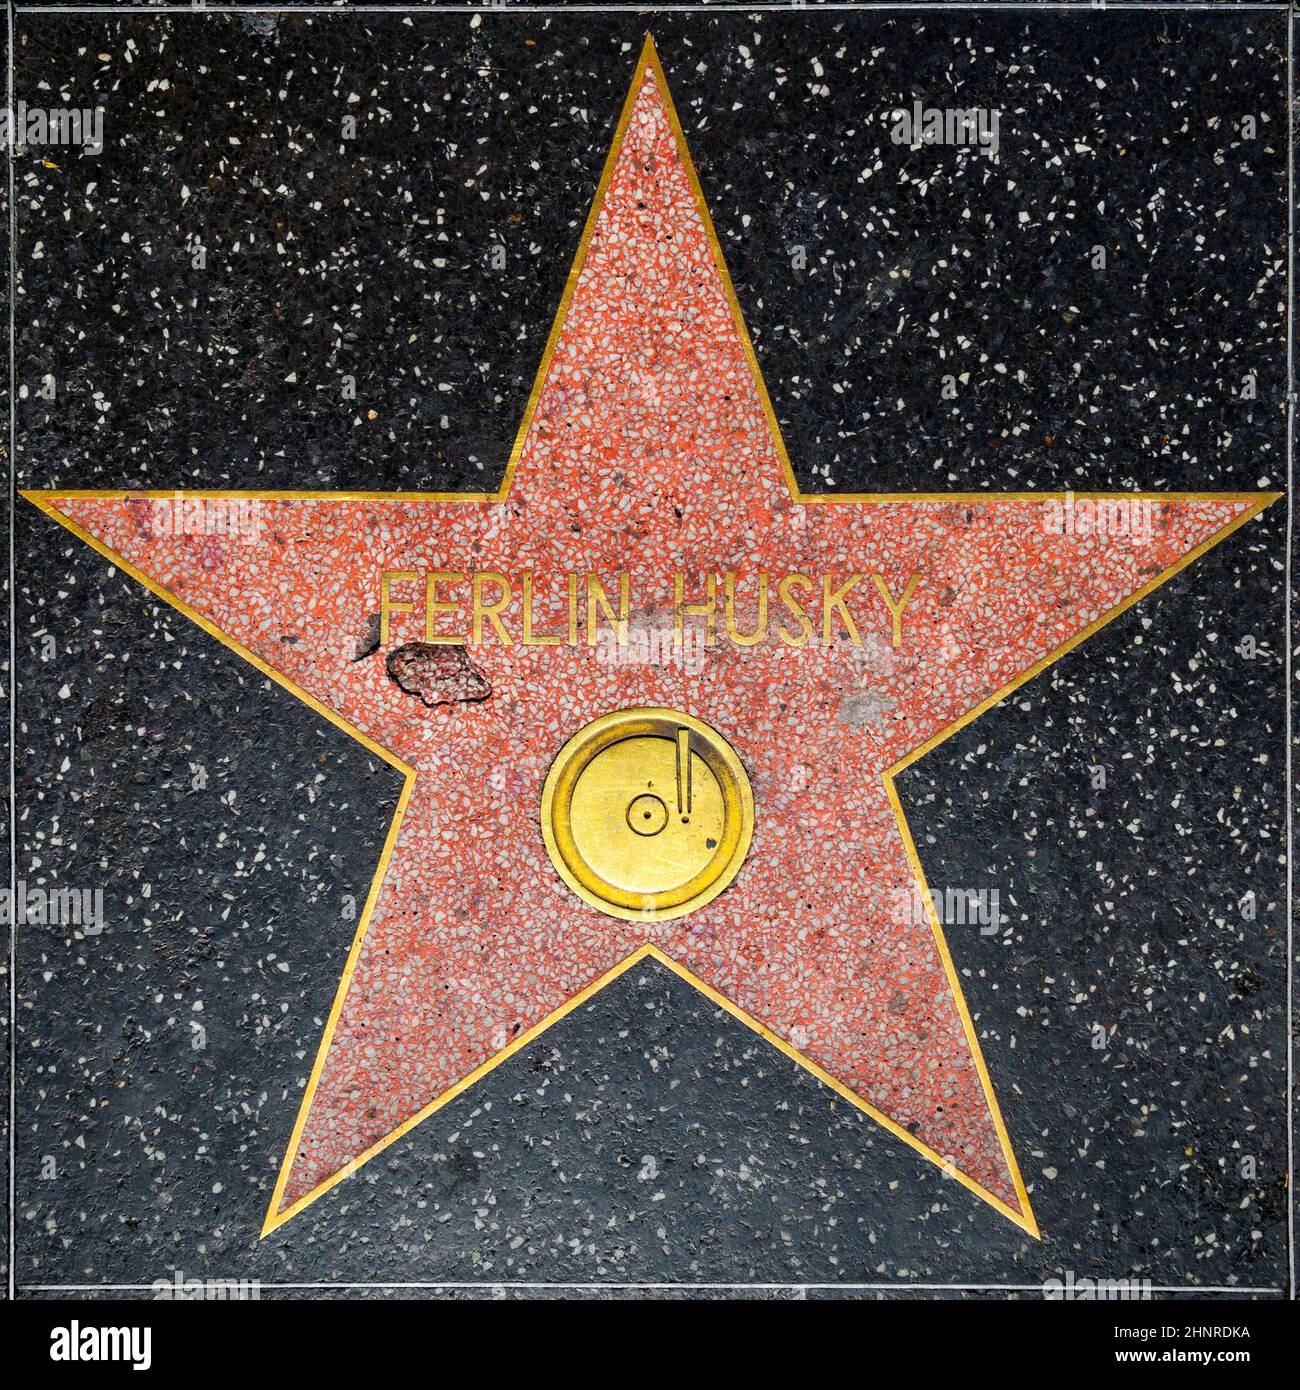 Ferlin Husky's star on Hollywood Walk of Fame Stock Photo